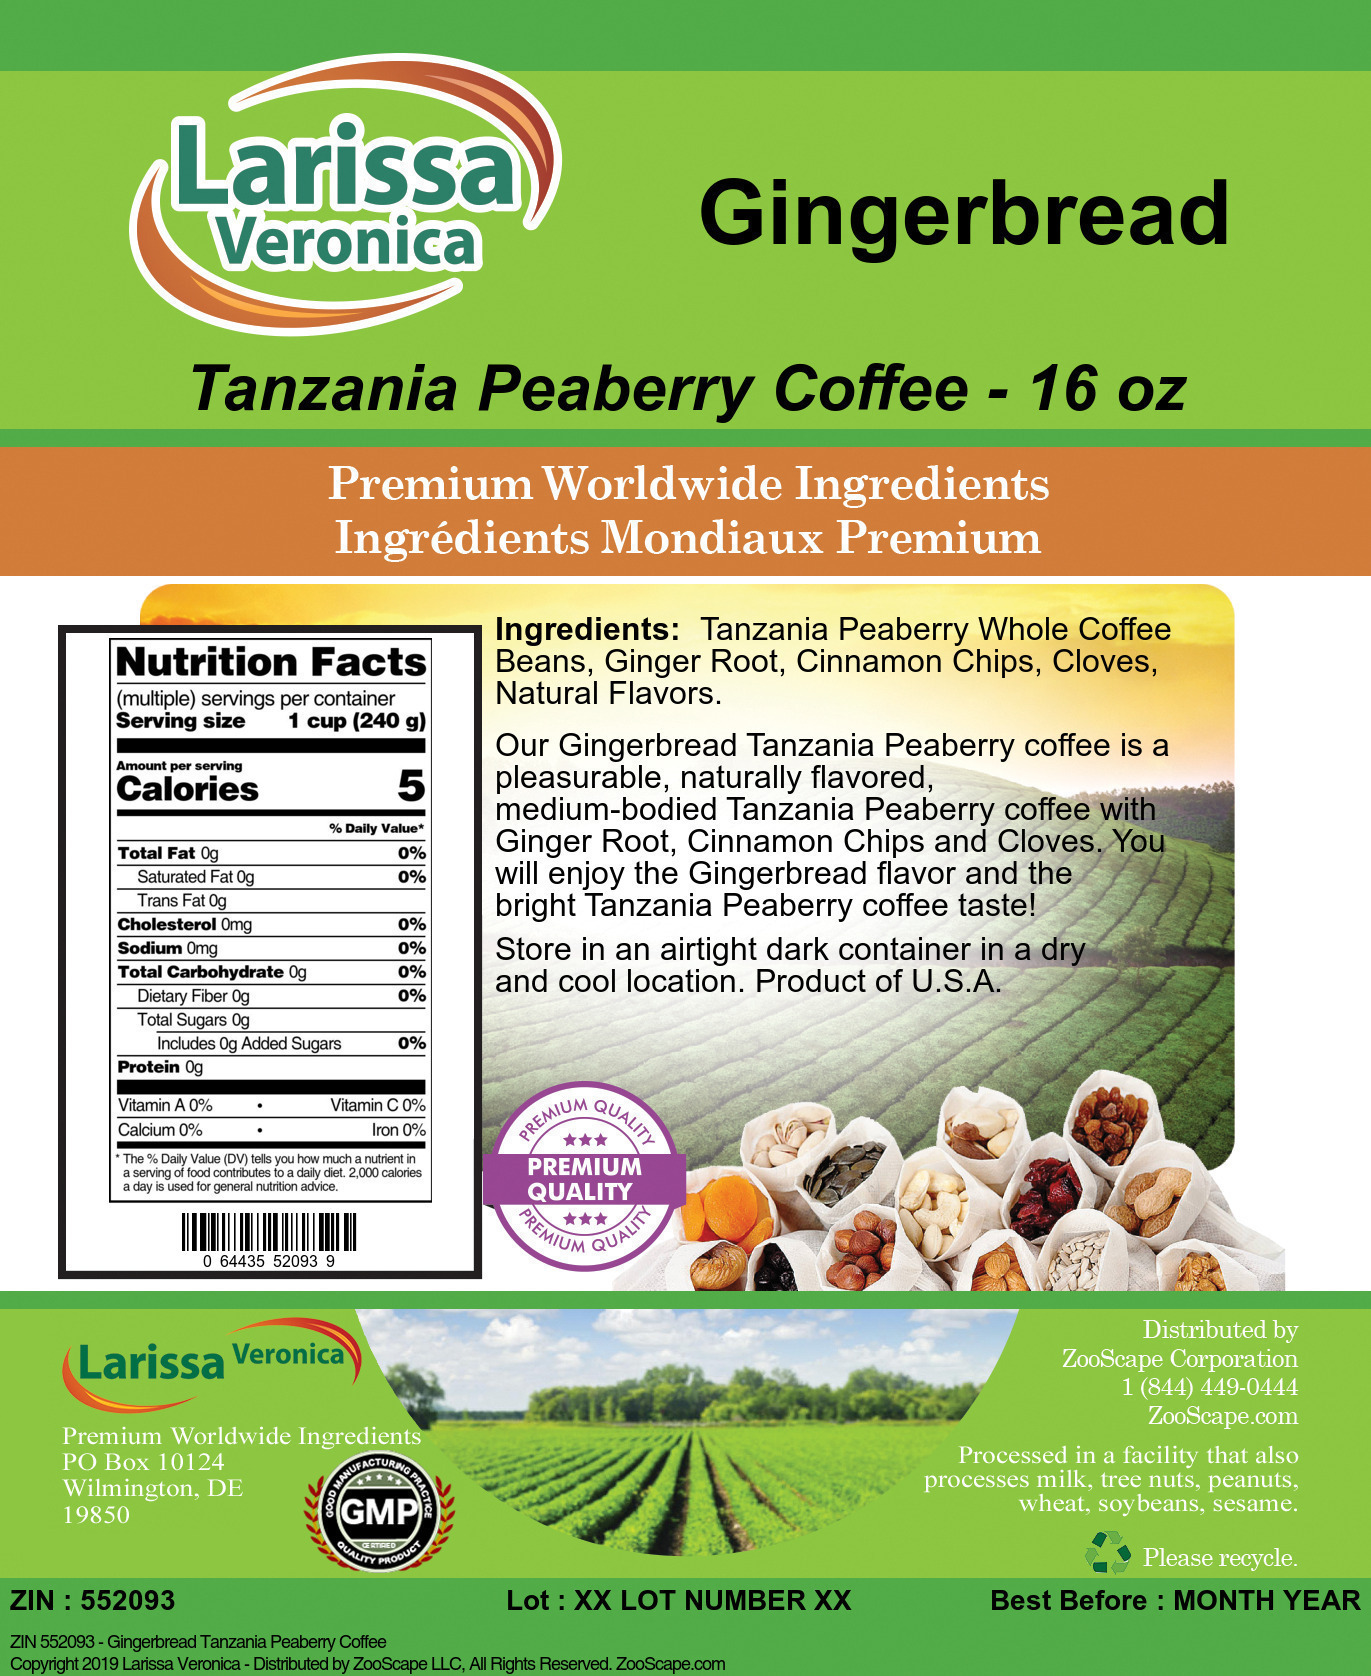 Gingerbread Tanzania Peaberry Coffee - Label